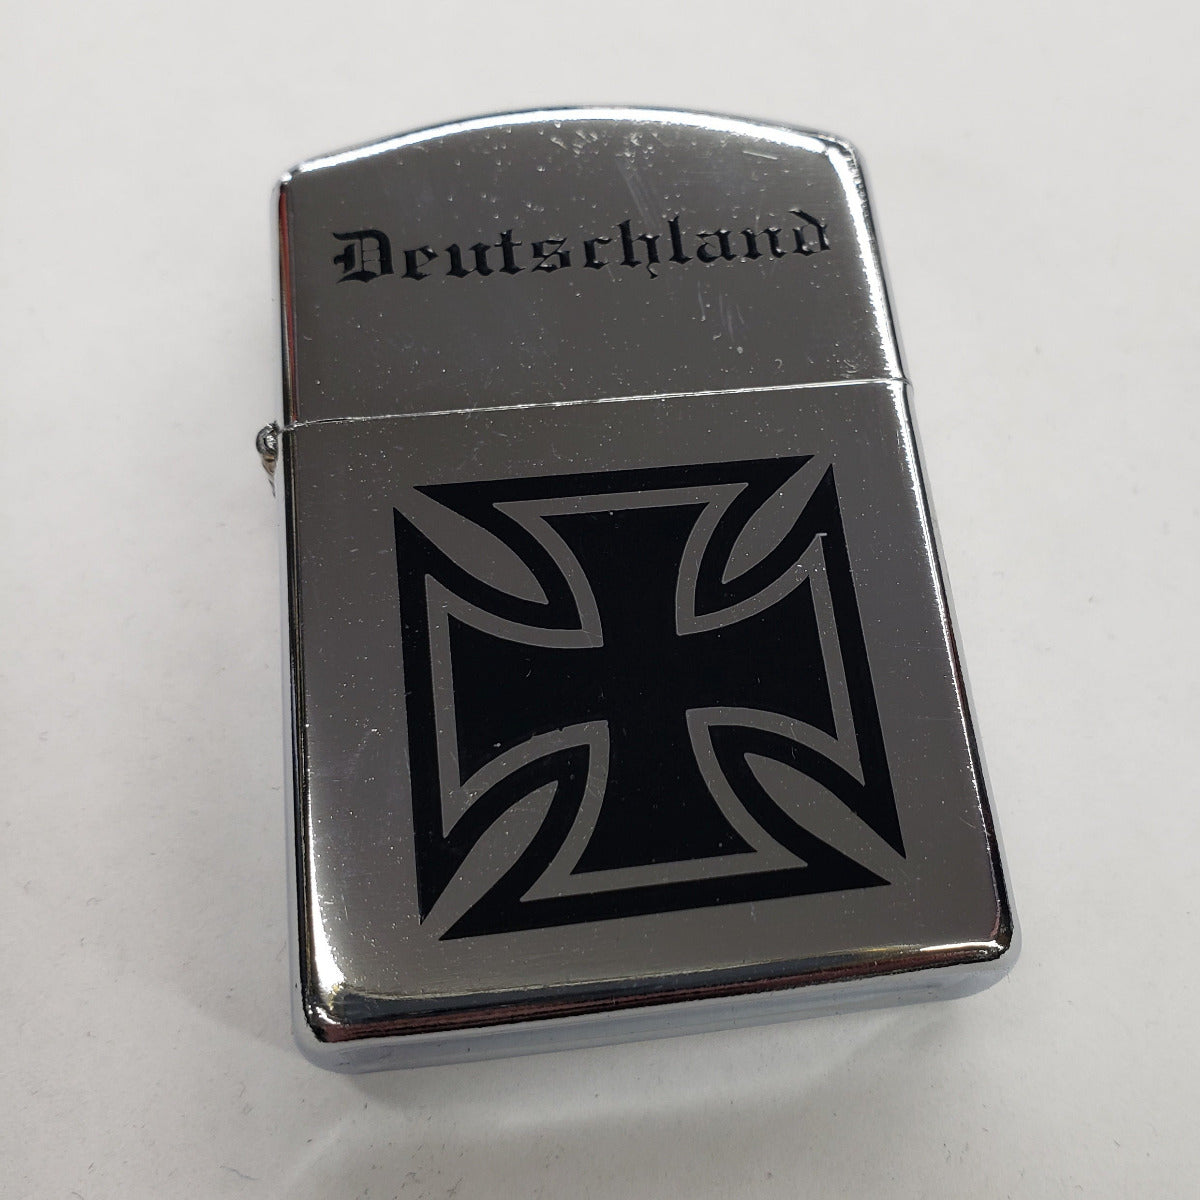 'Deutschland' Iron Cross Lighter